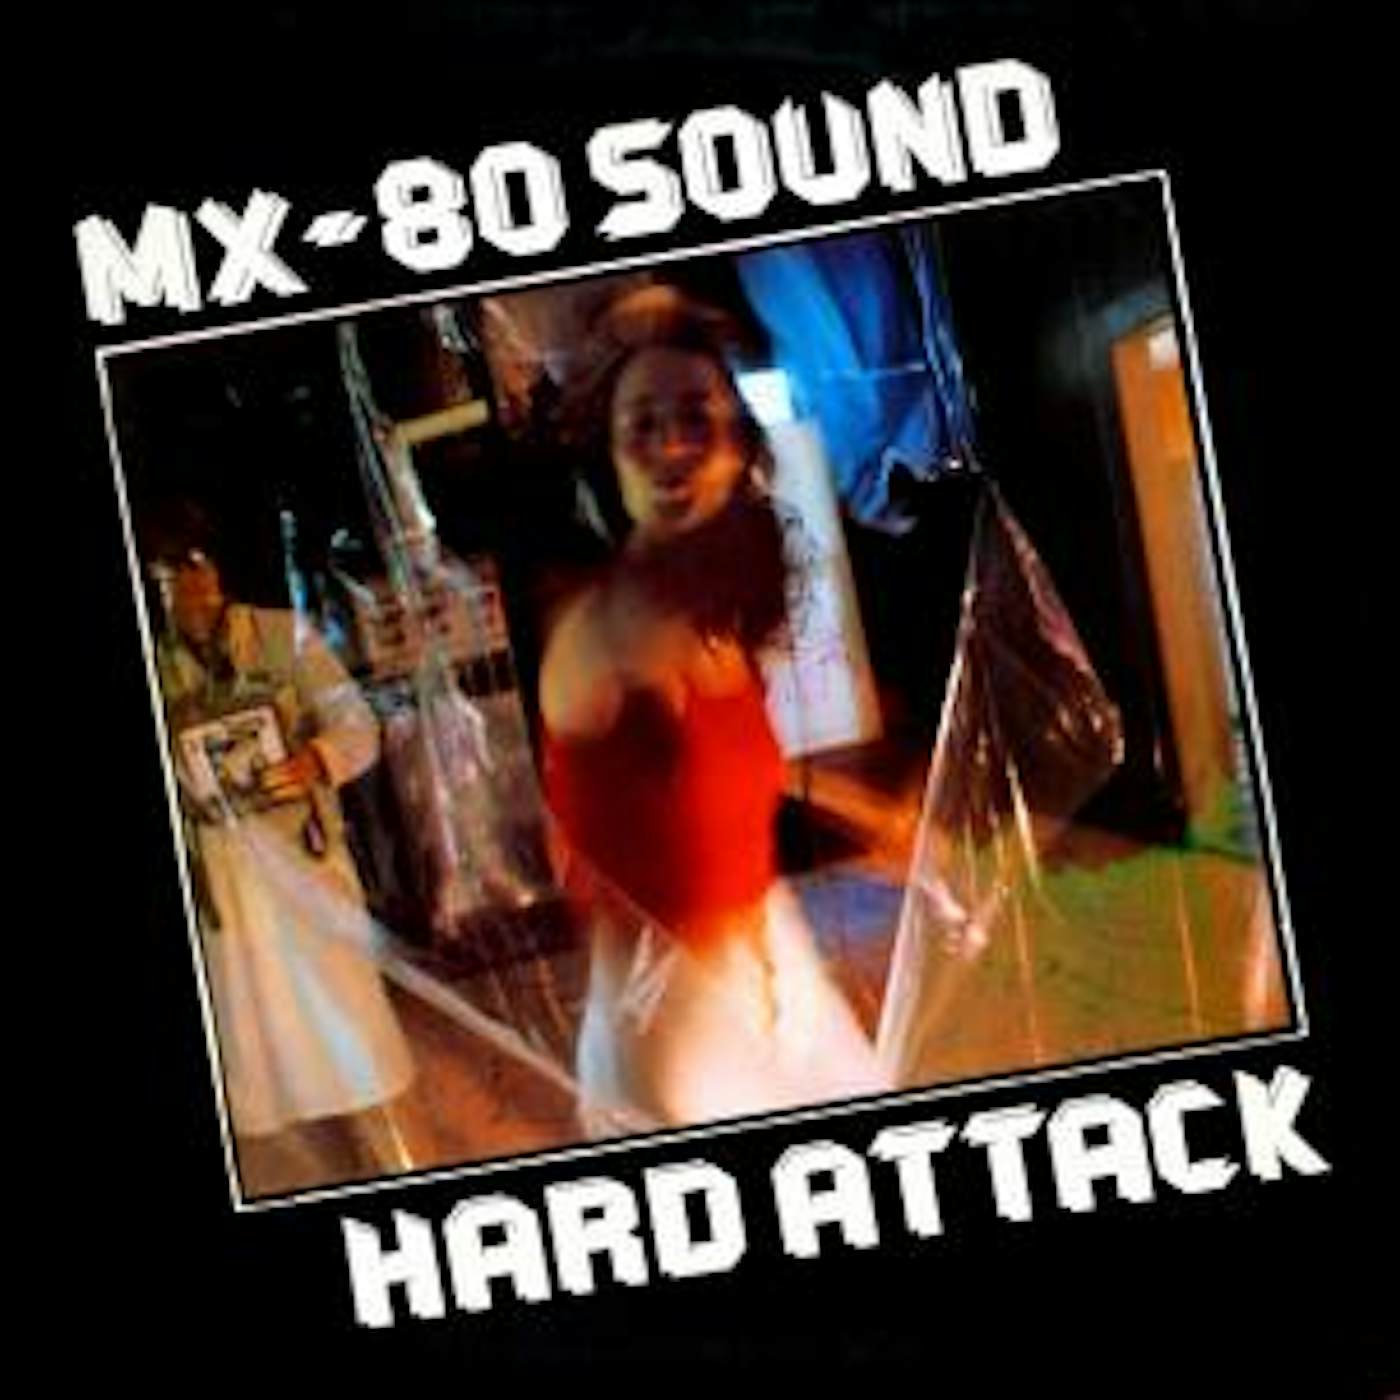 MX-80 Sound HARD ATTACK CD